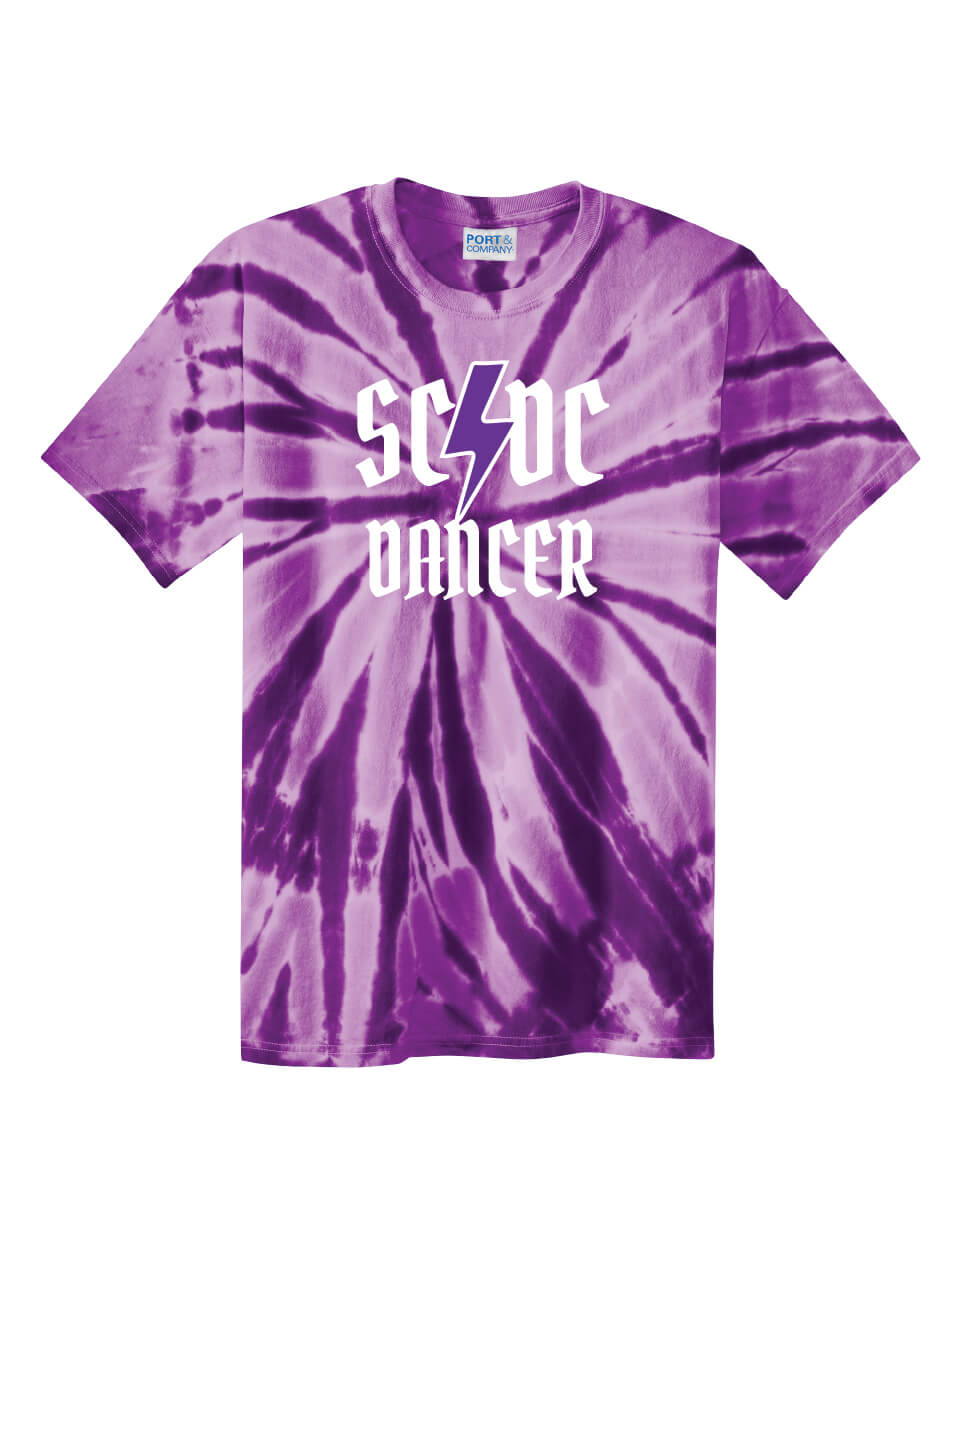 SCDC Dancer Tie Dye Short Sleeve T-Shirt purple